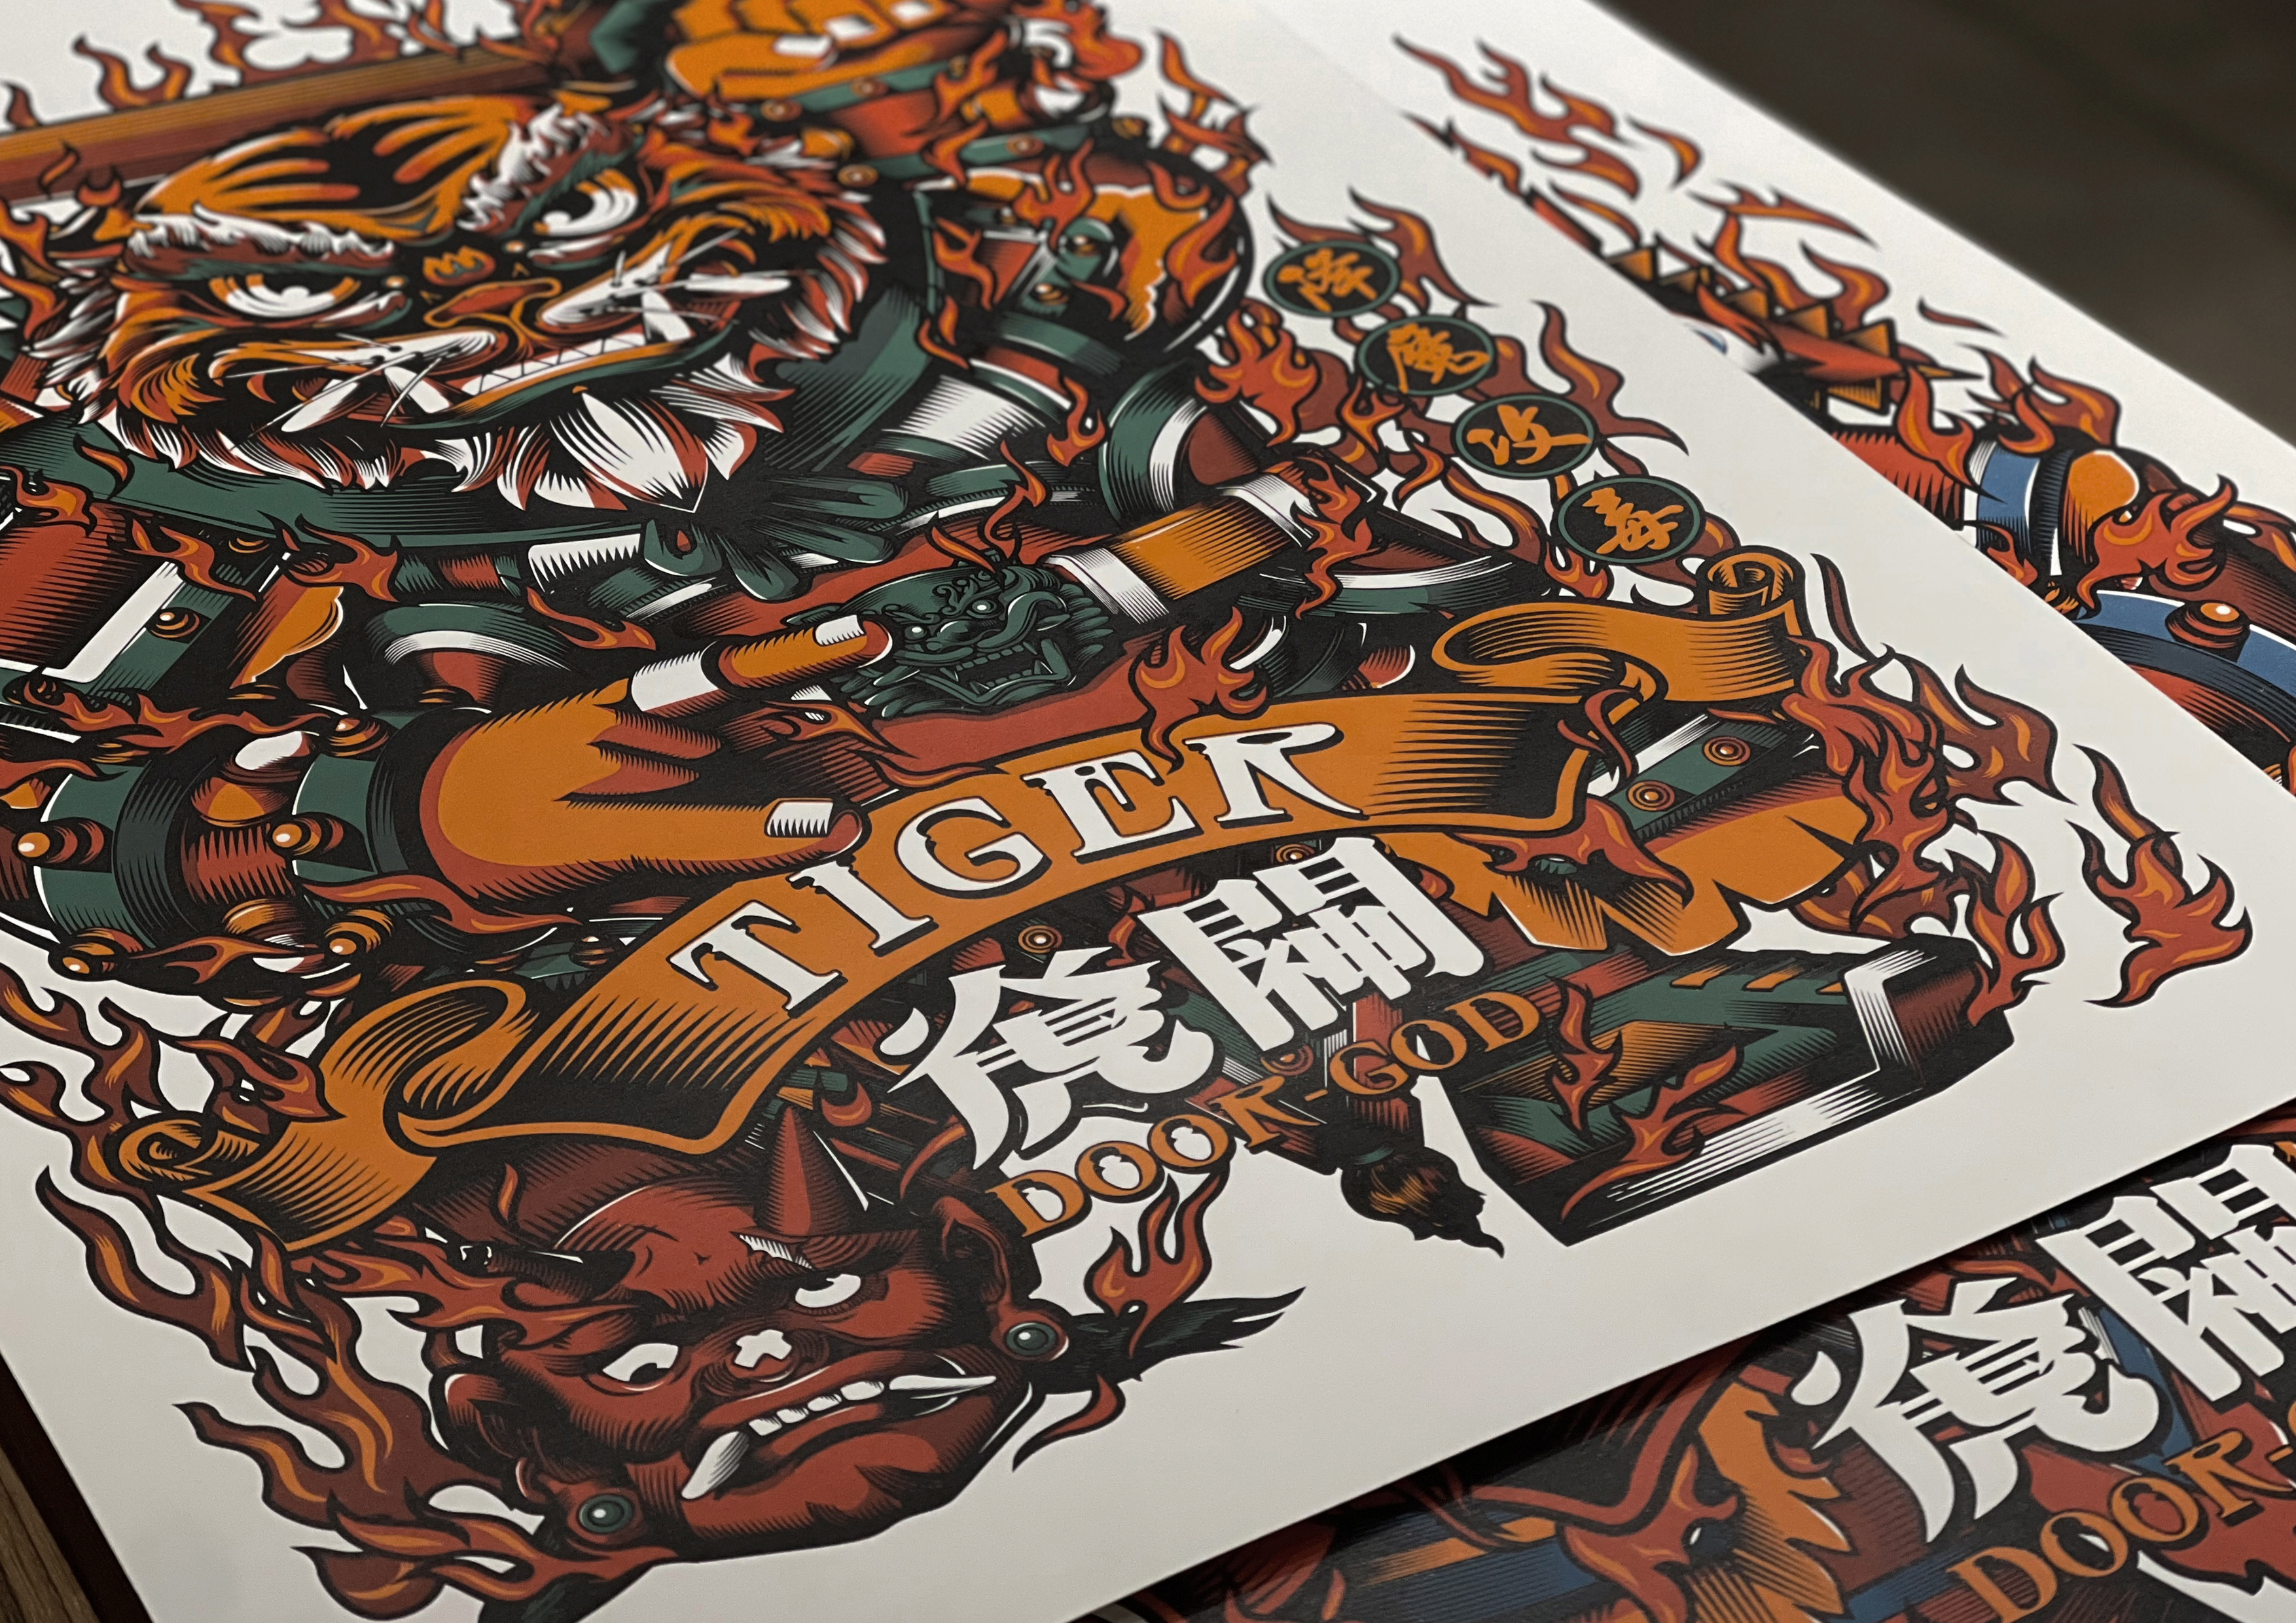 Illustrated Design on Door Gods, Fire Tigers